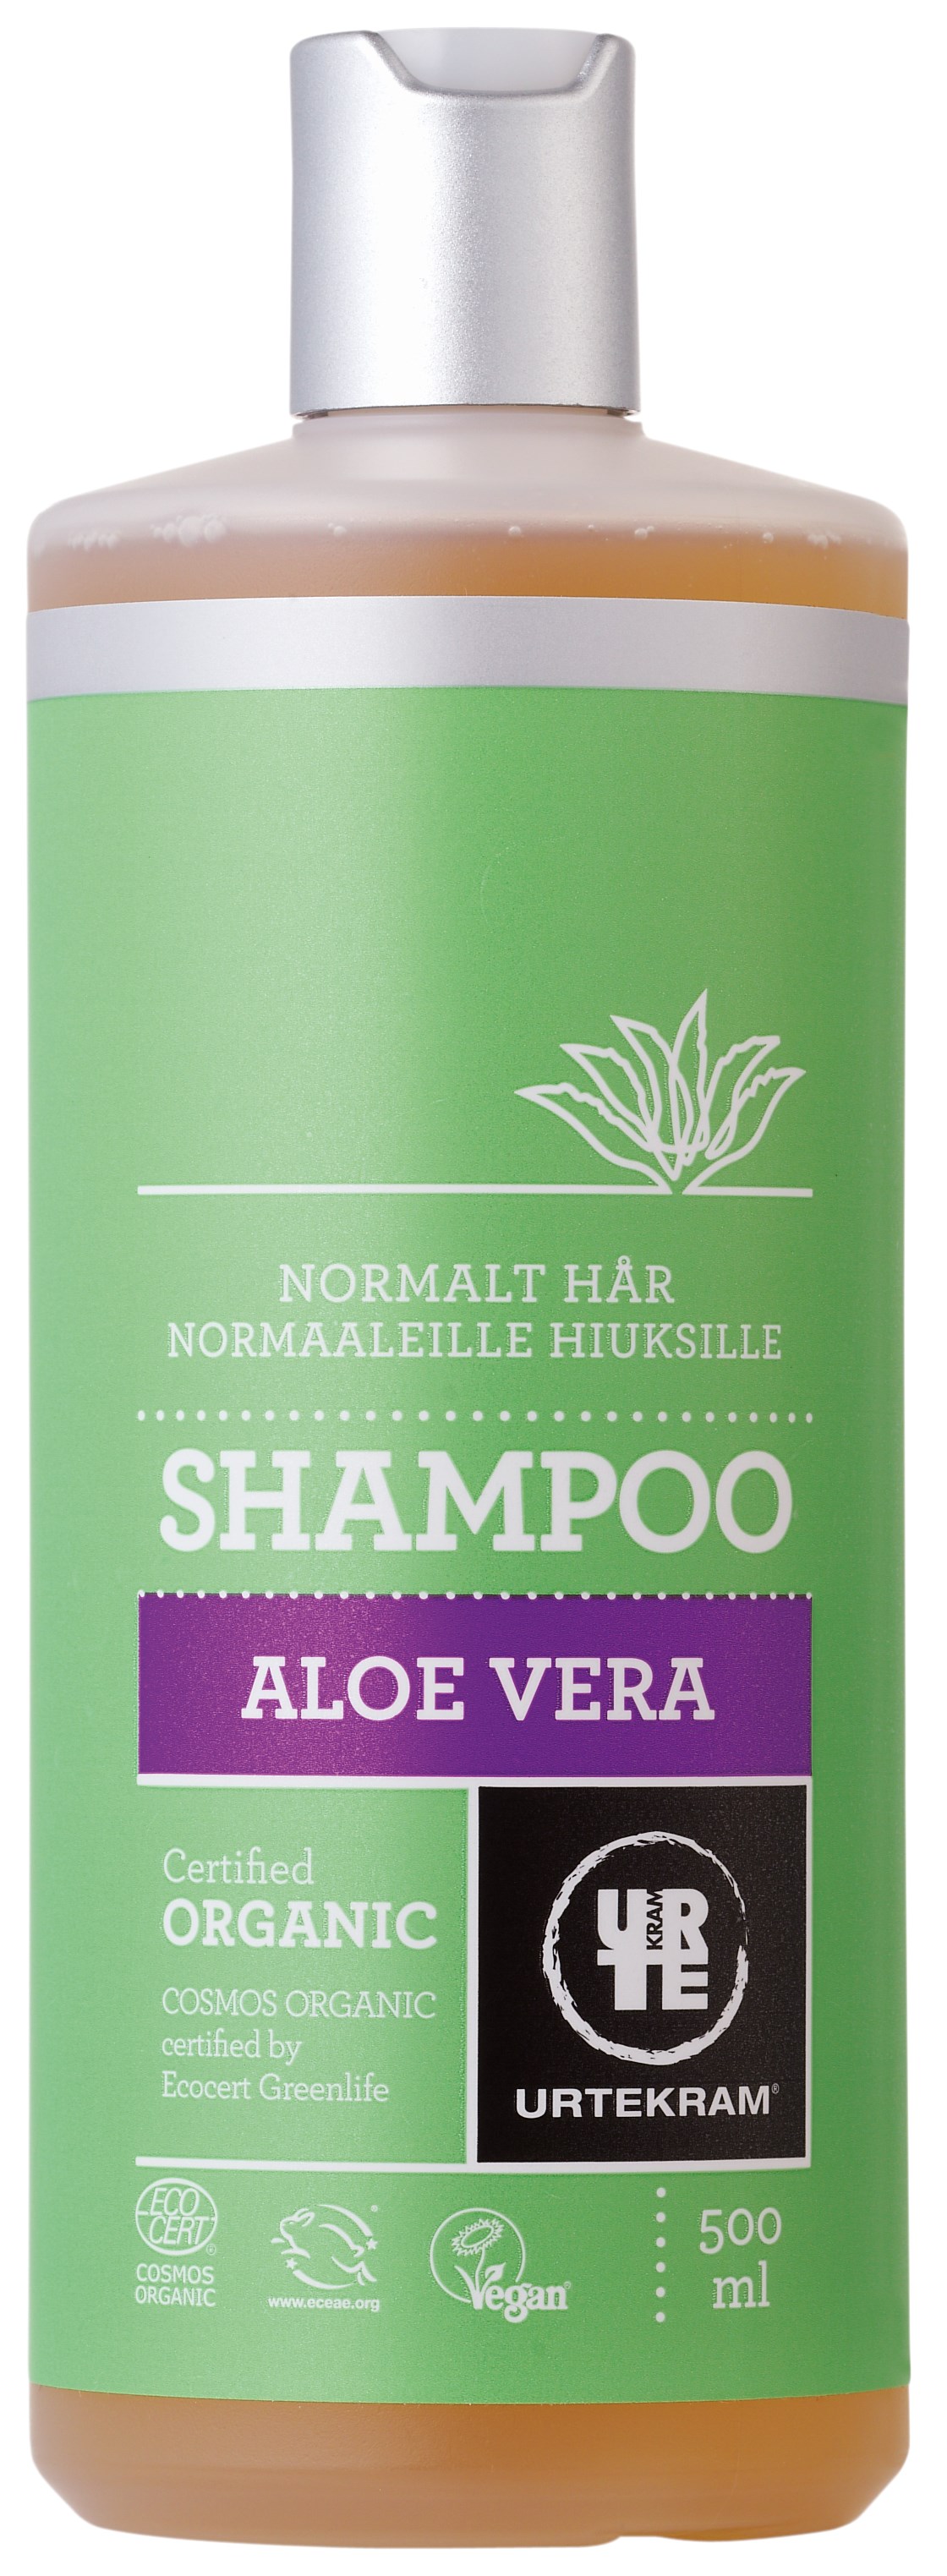 Urtekram Aloe Vera Shampoo Normal 500ml